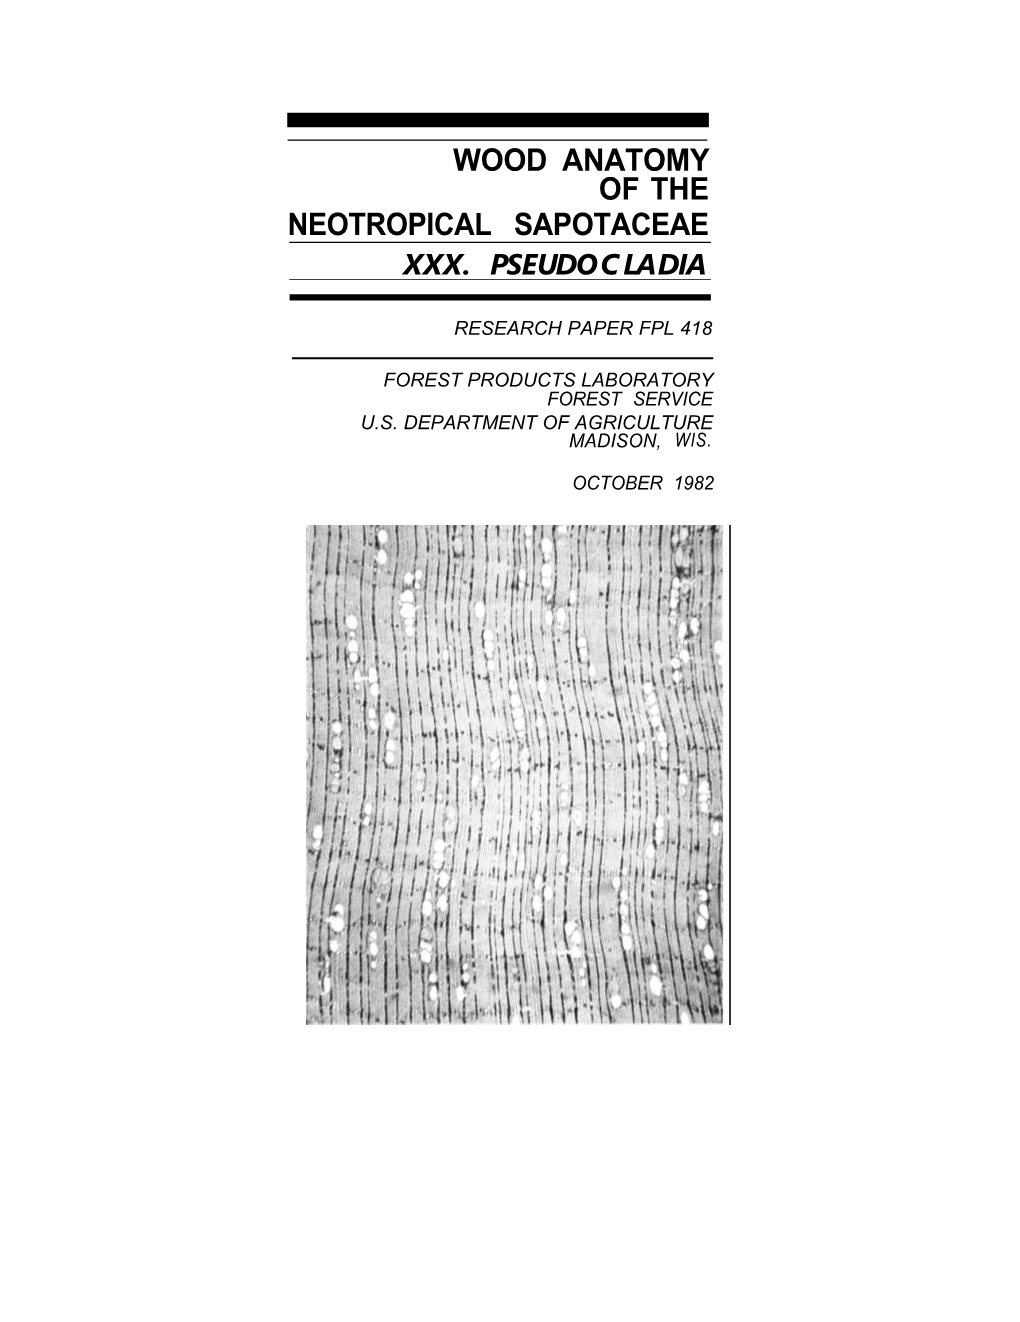 Wood Anatomy of the Neotropical Sapotaceae Xxx. Pseudocladia